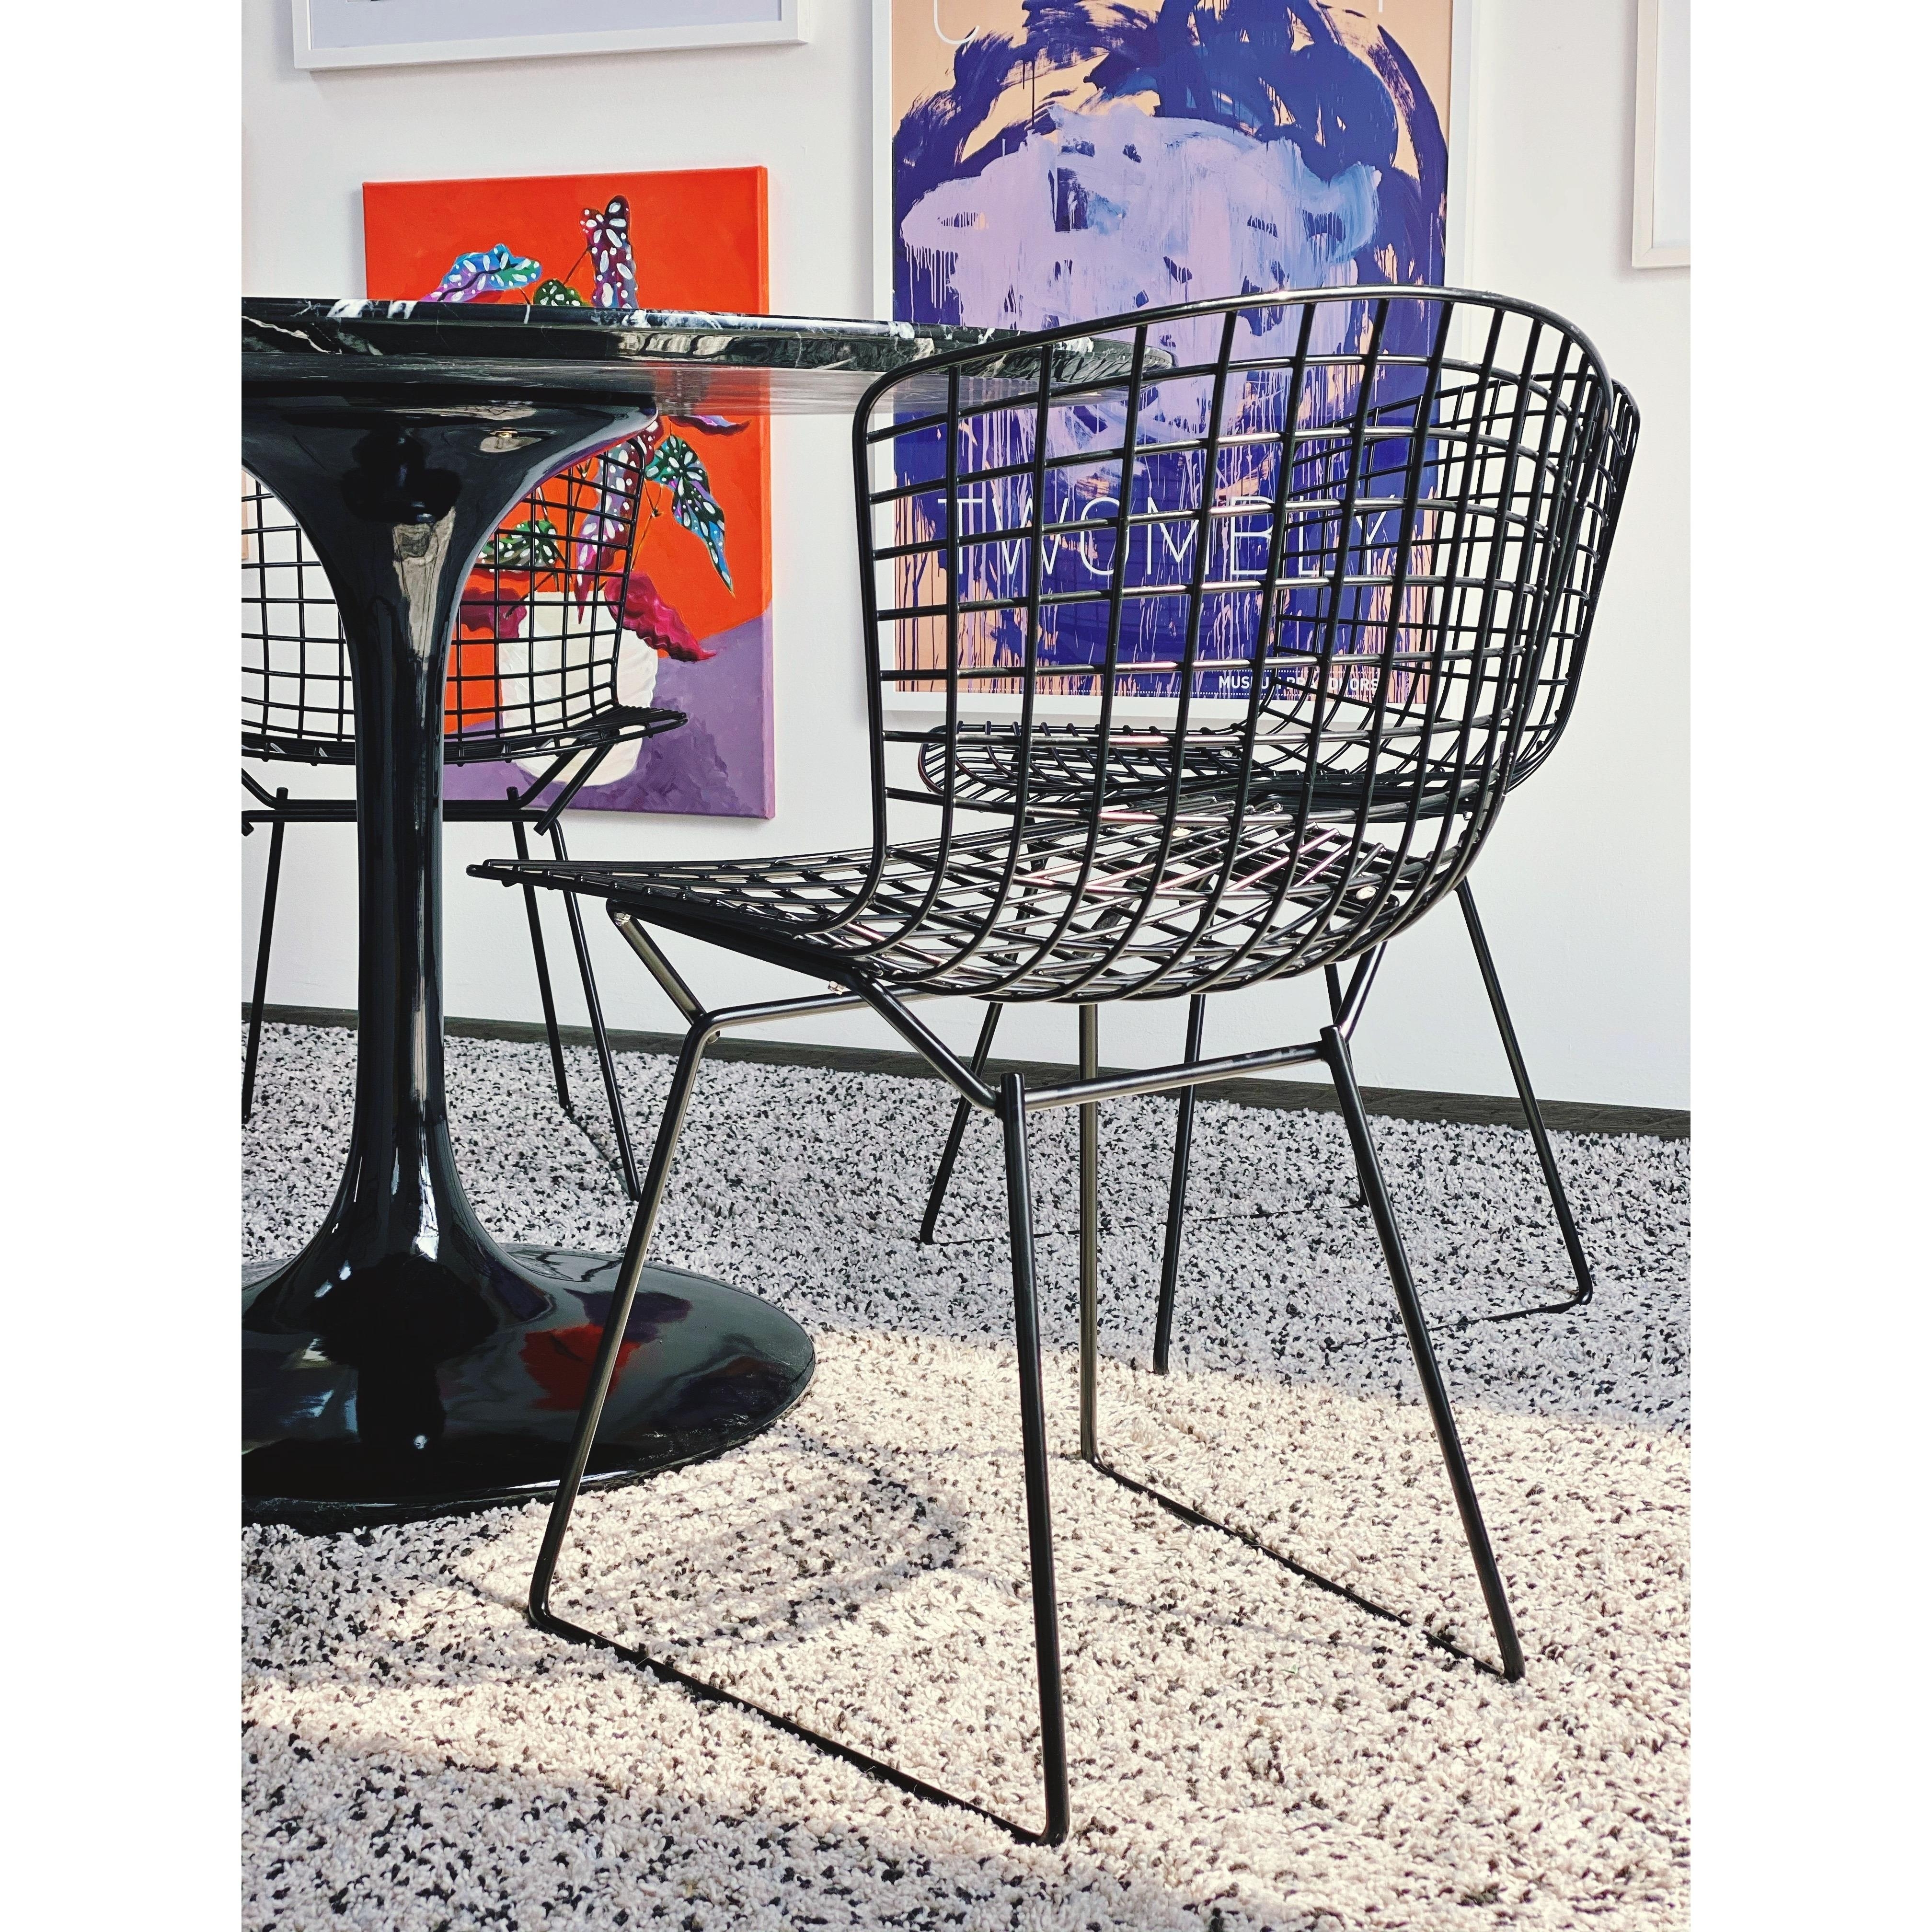 Mein absoluter Lieblingsstuhl - der Bertoia Wire Chair, oder auch Side Chair
#designklassiker
#bertoia
#wirechair